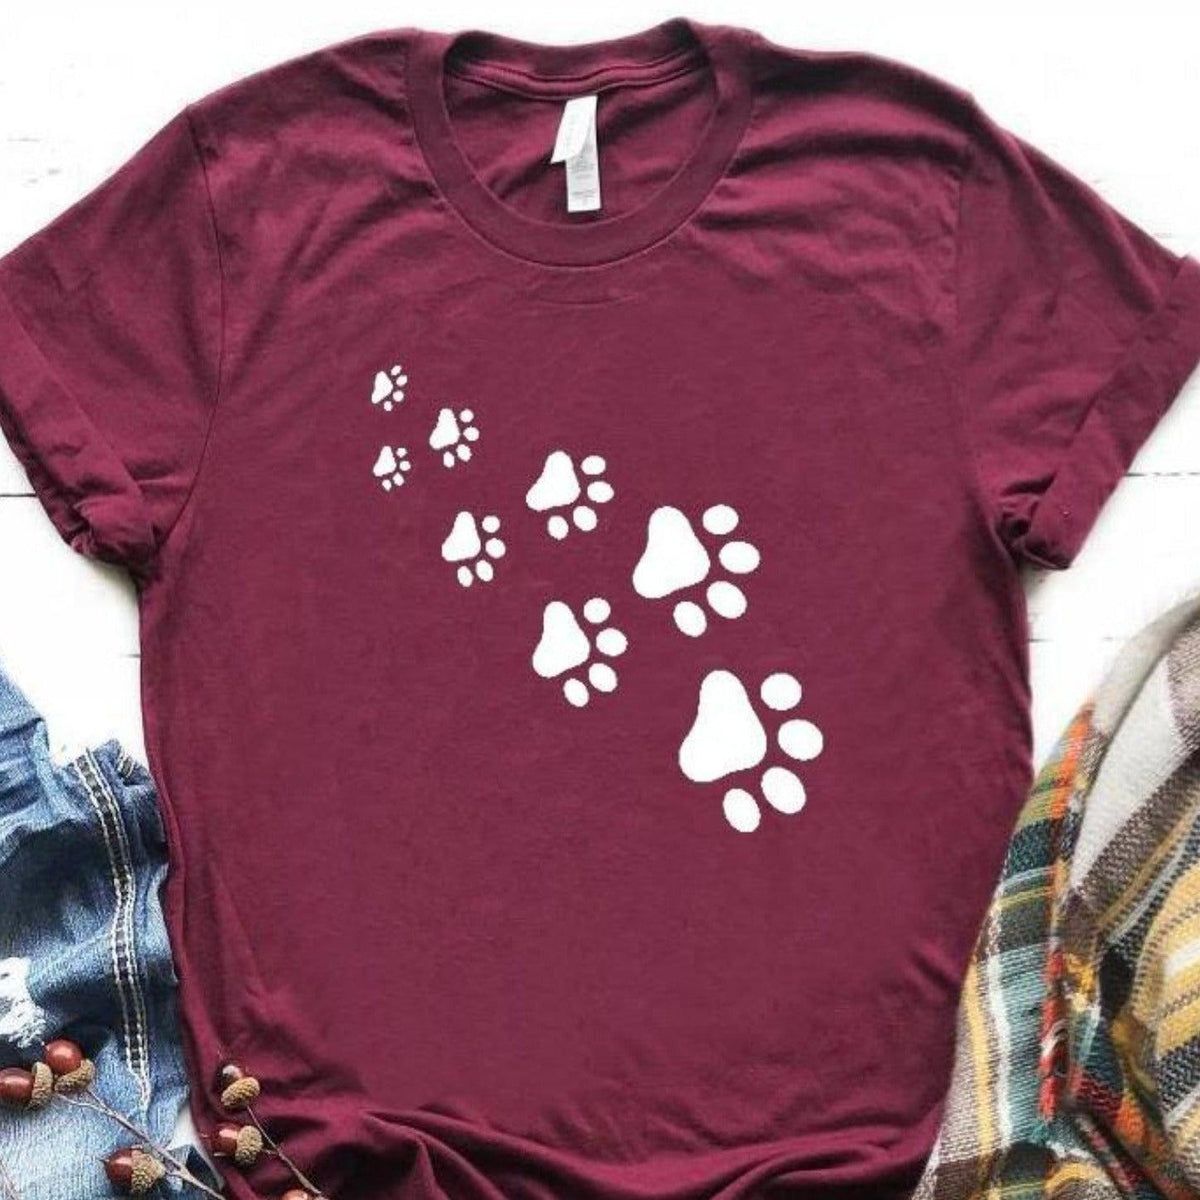 Dog Cat Paws Print Casual Tshirt - Bordeaux